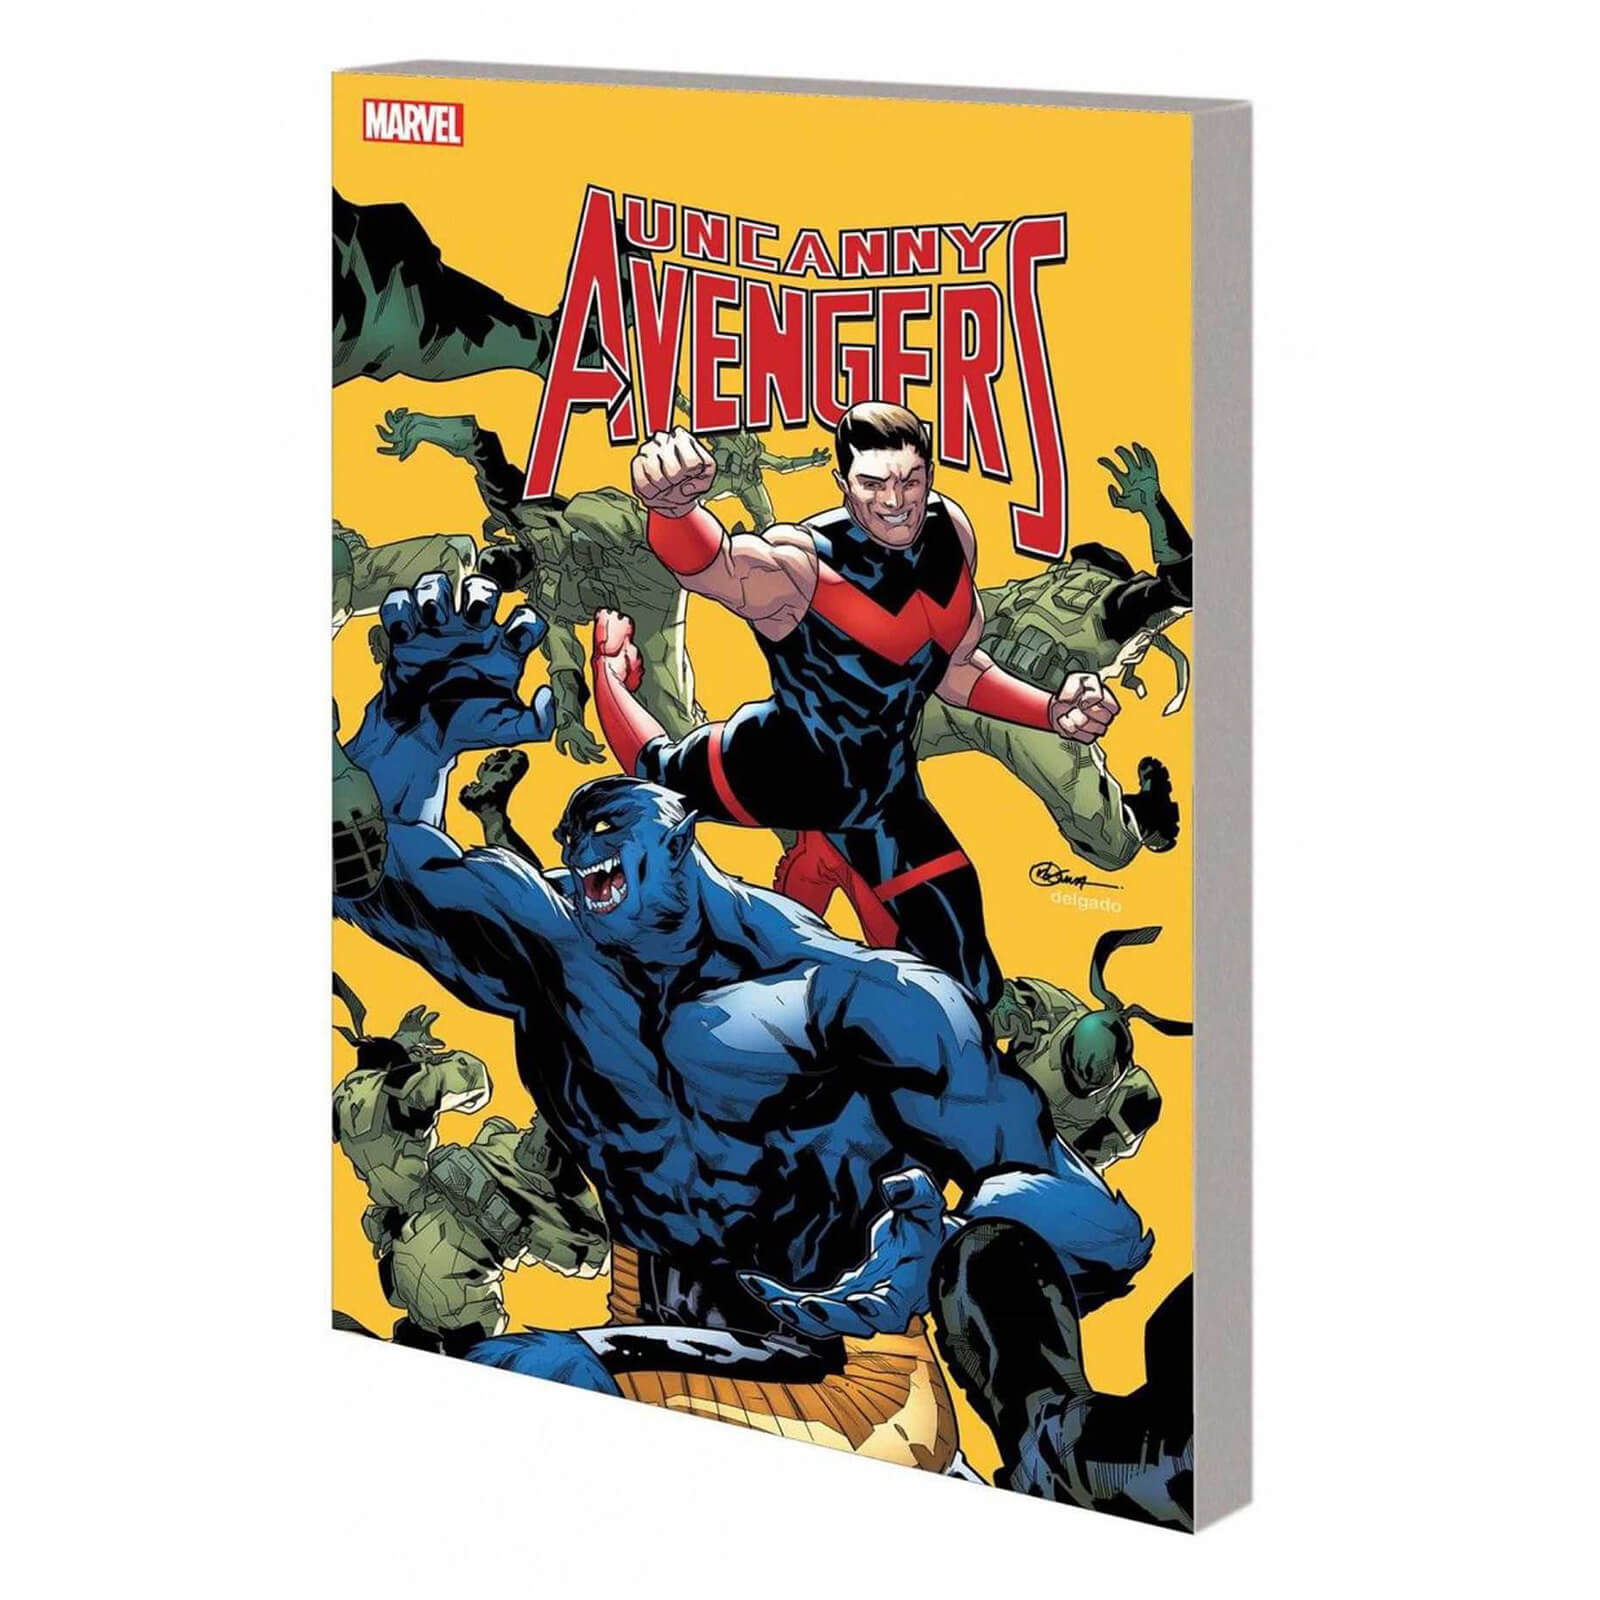 Marvel Comics Uncanny Avengers Unity Trade Paperback Vol 05 Stars And Garters Graphic Novel